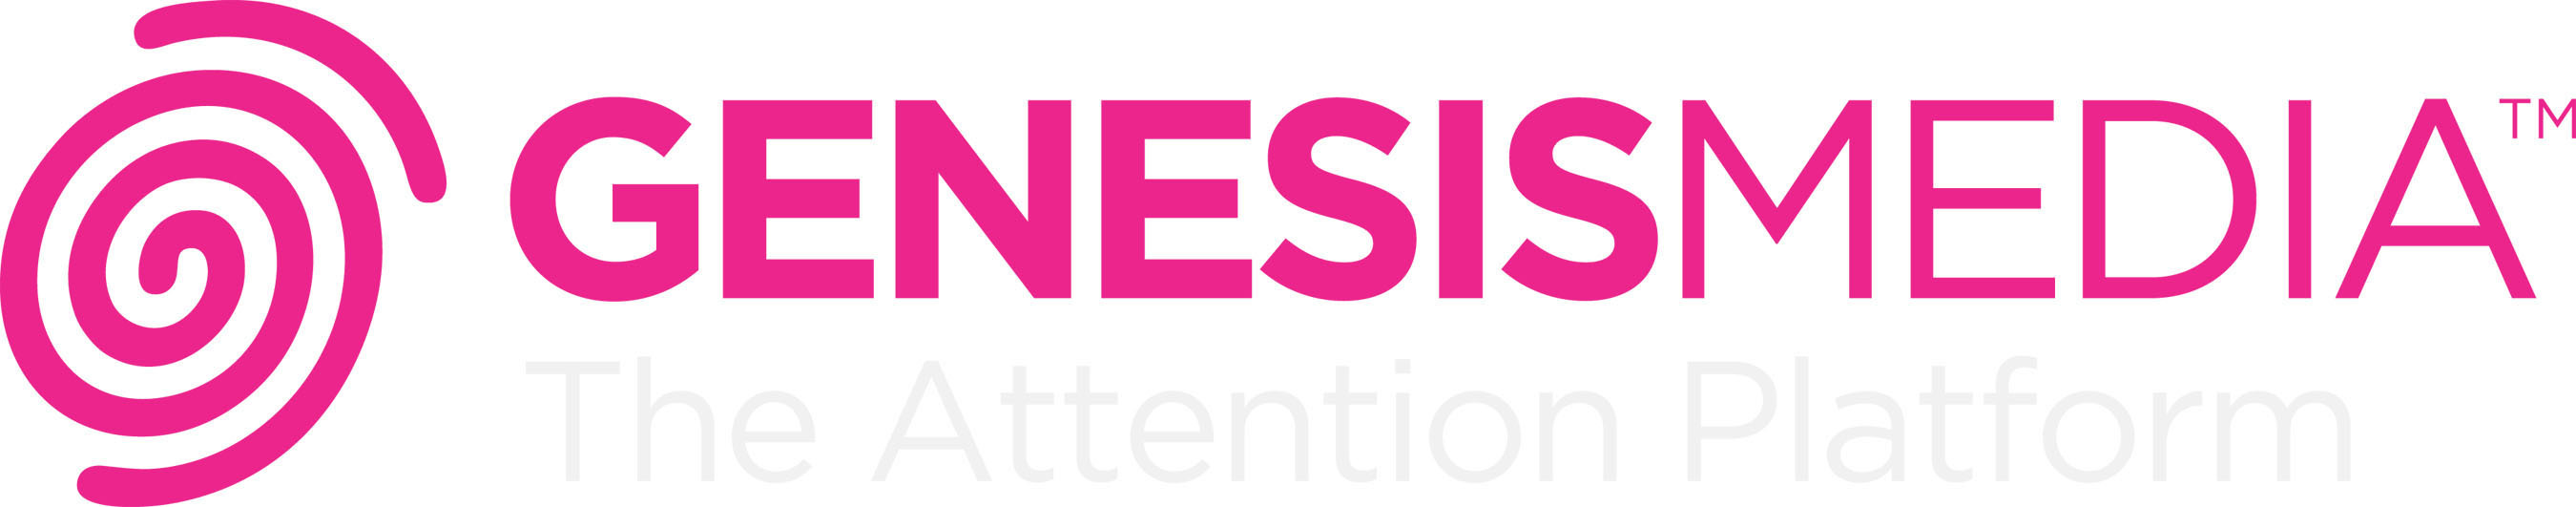 Genesis Media Logo (PRNewsFoto/Genesis Media) (PRNewsFoto/Genesis Media)